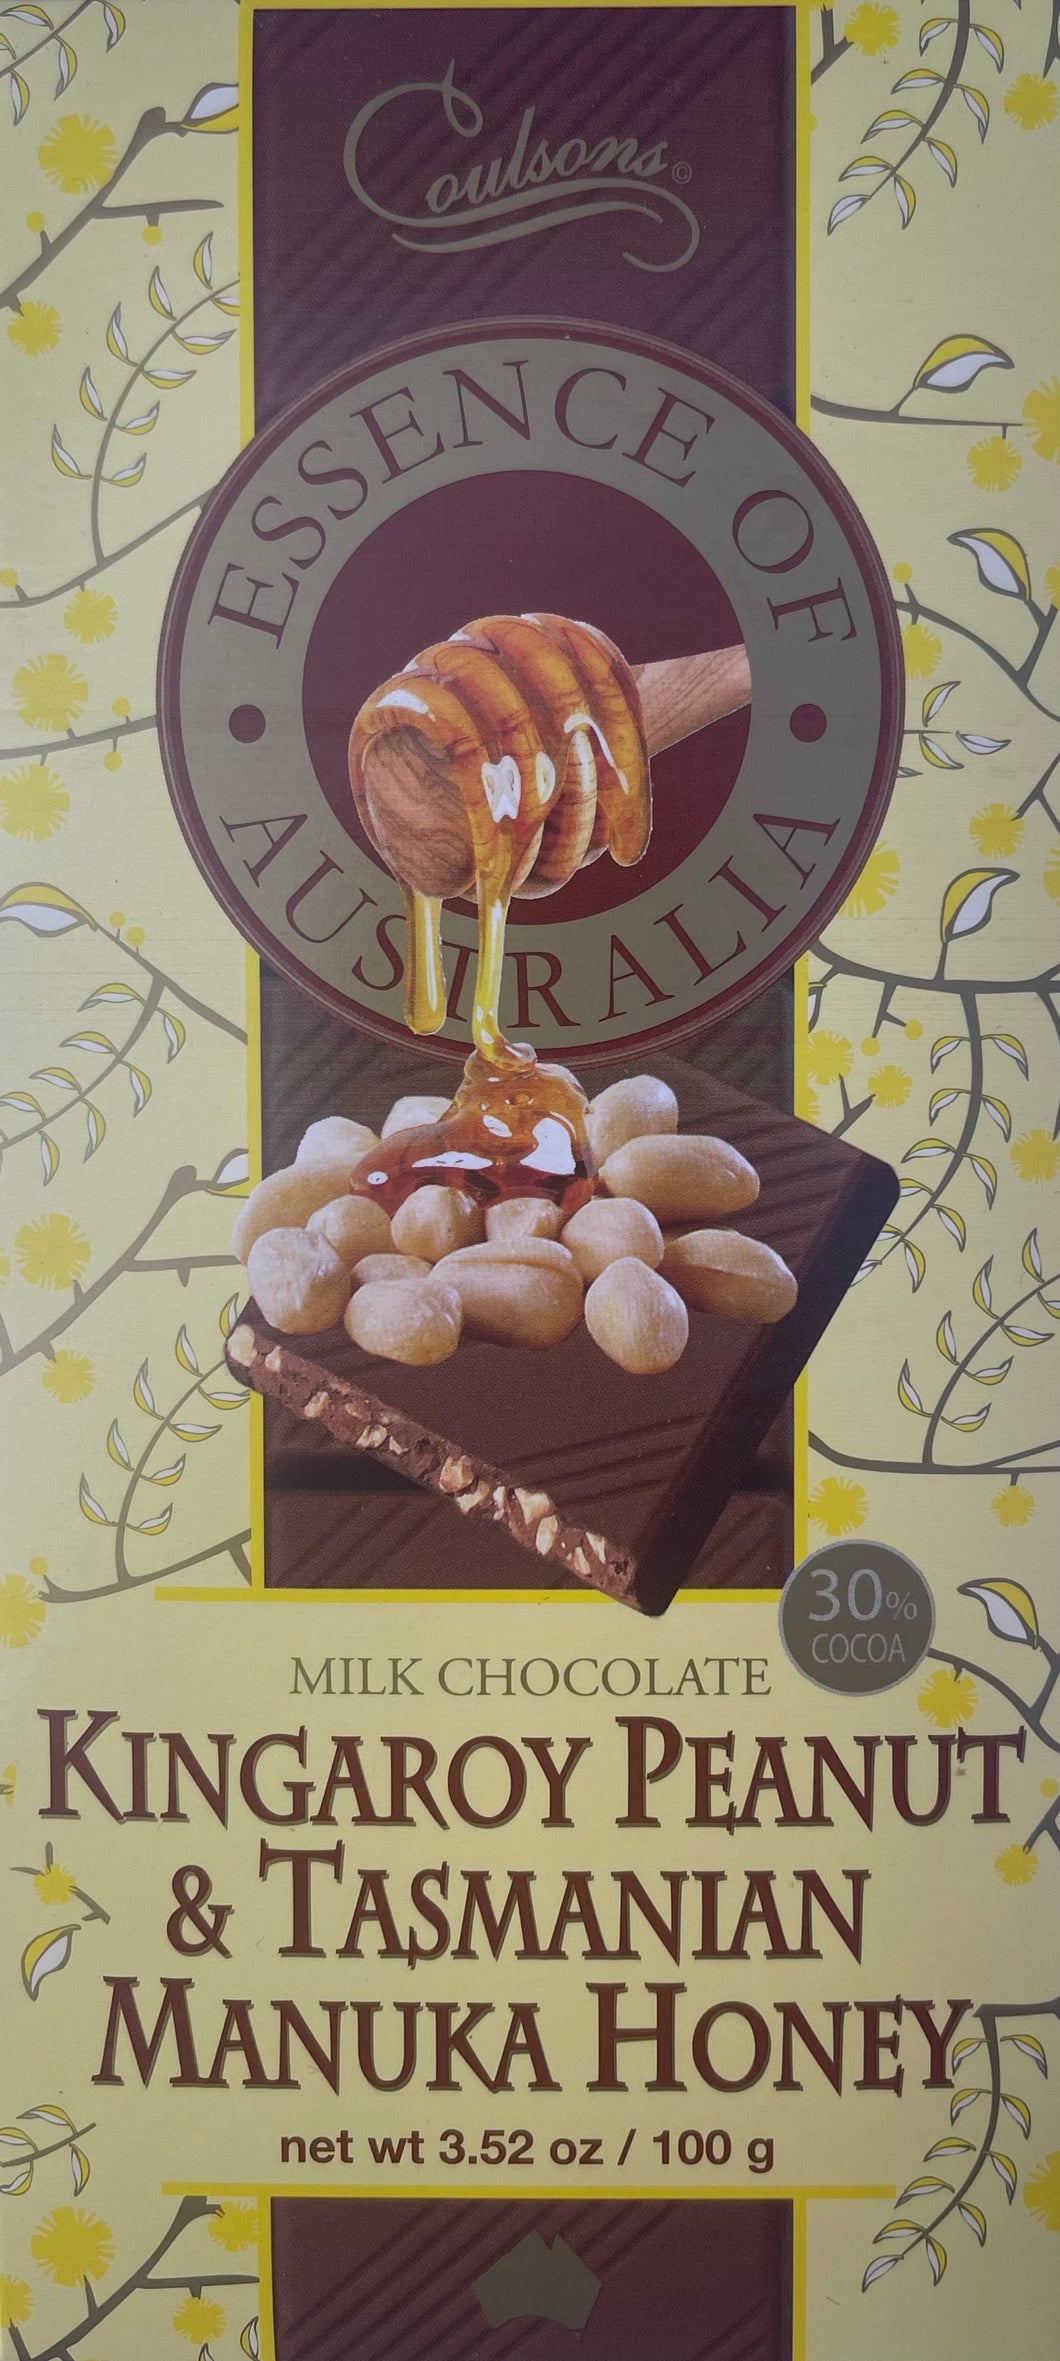 Coulsons Milk Chocolate Kingaroy Peanut & Tasmanian Manuka Honey